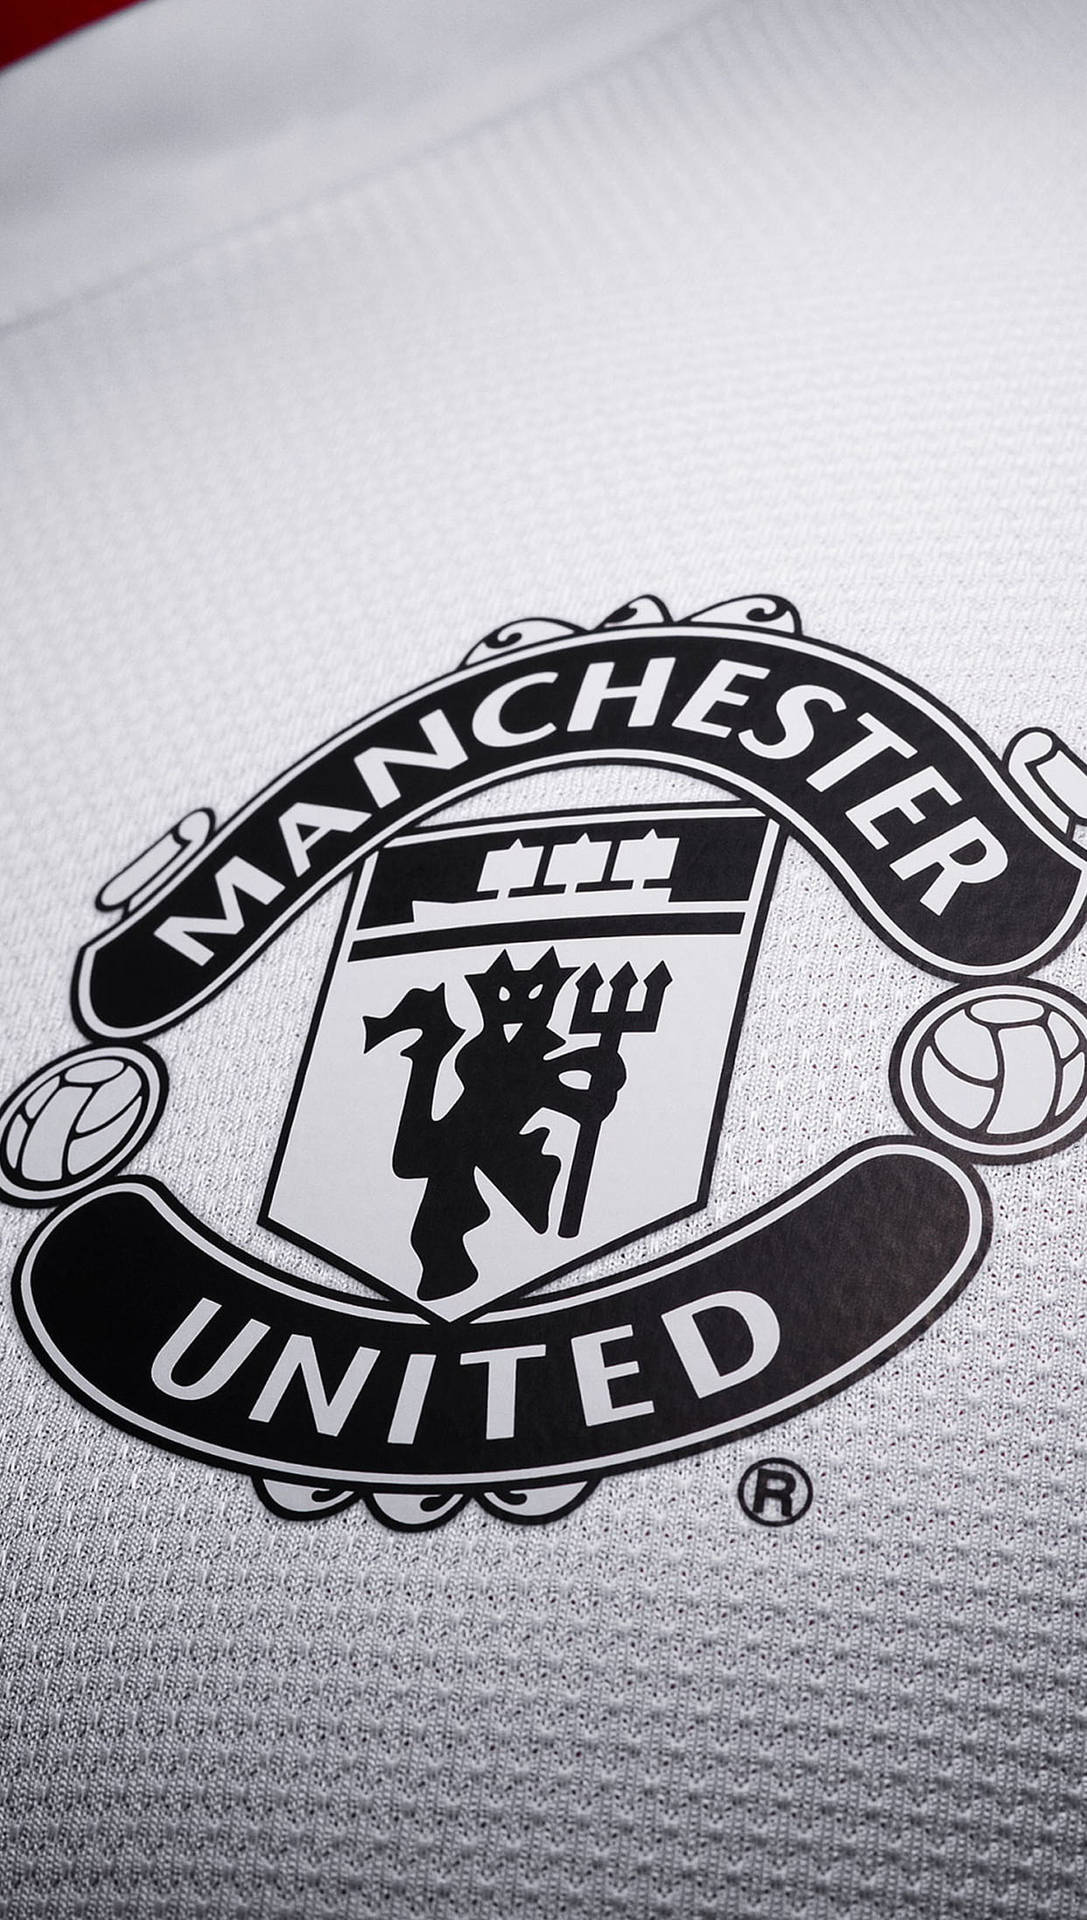 Shirt Design Of Manchester United Mobile Wallpaper